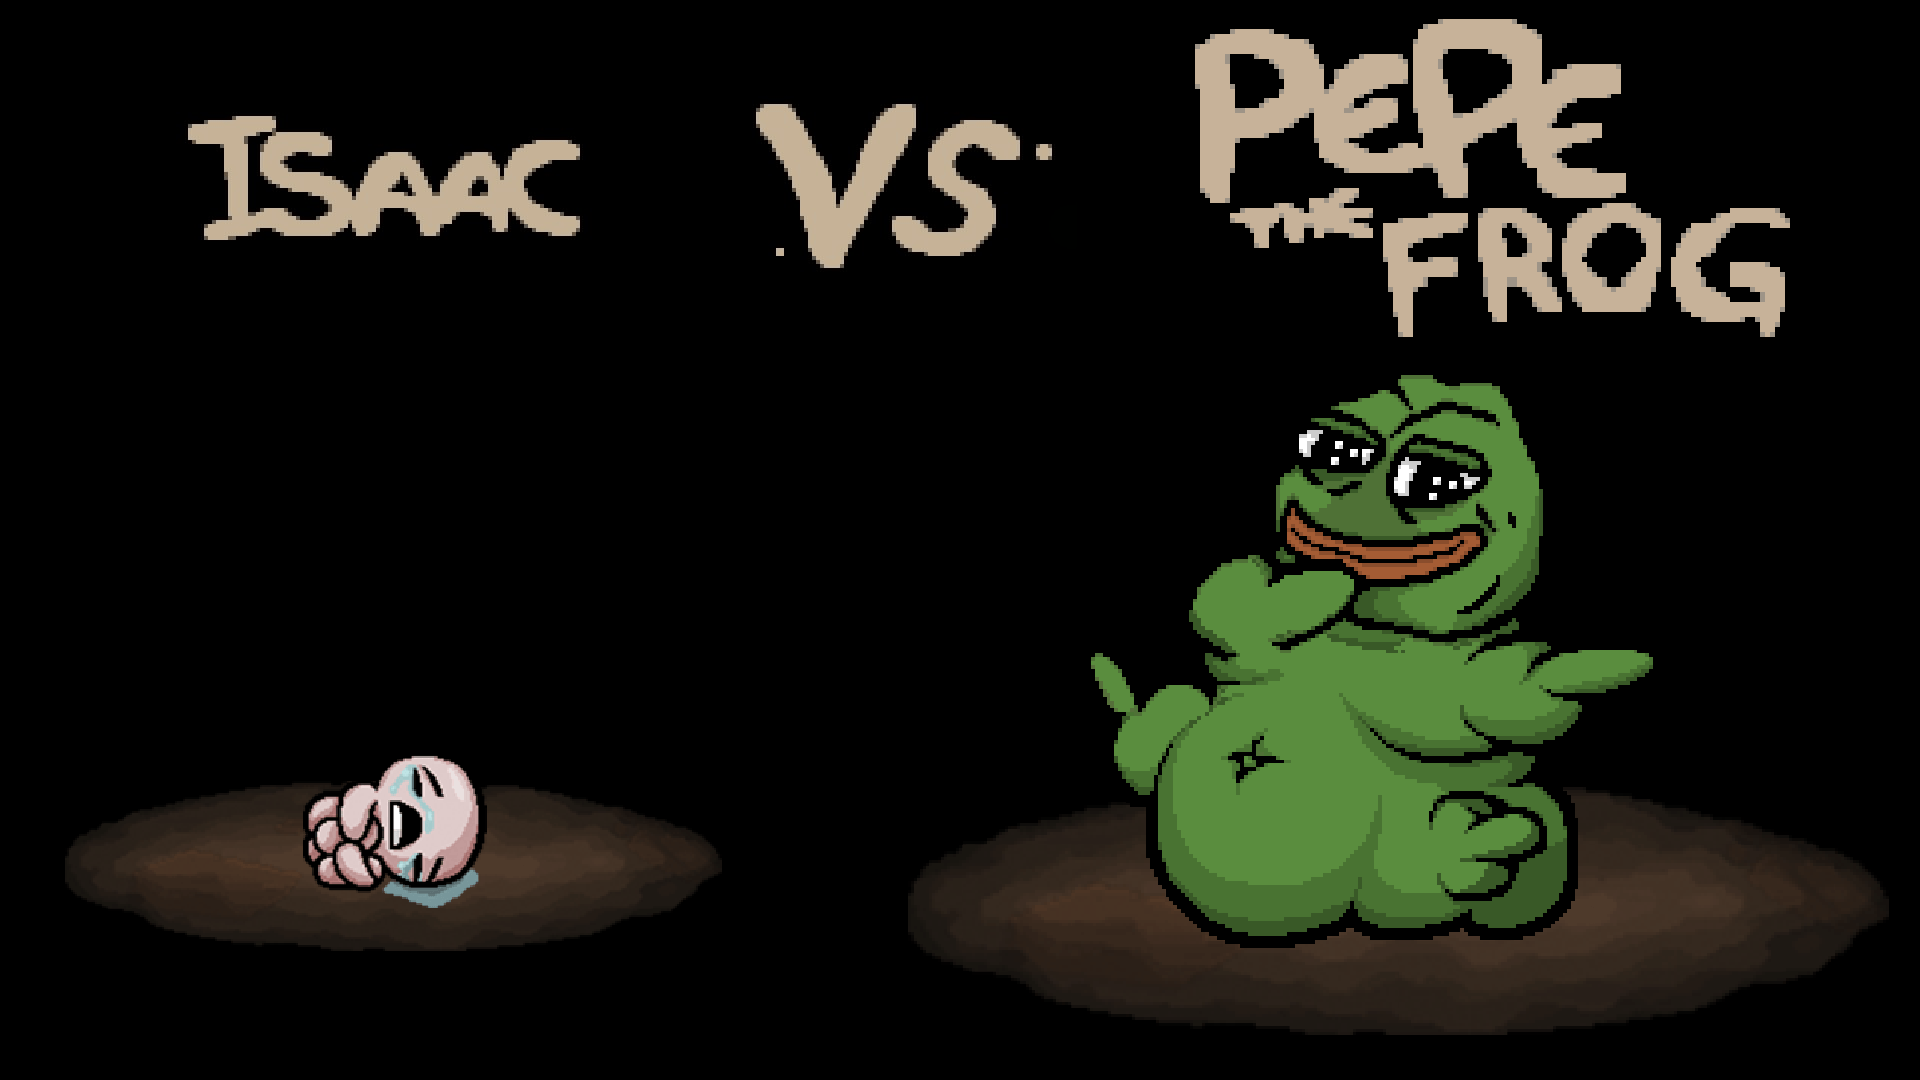 Isaac Vs Pepe the Frog